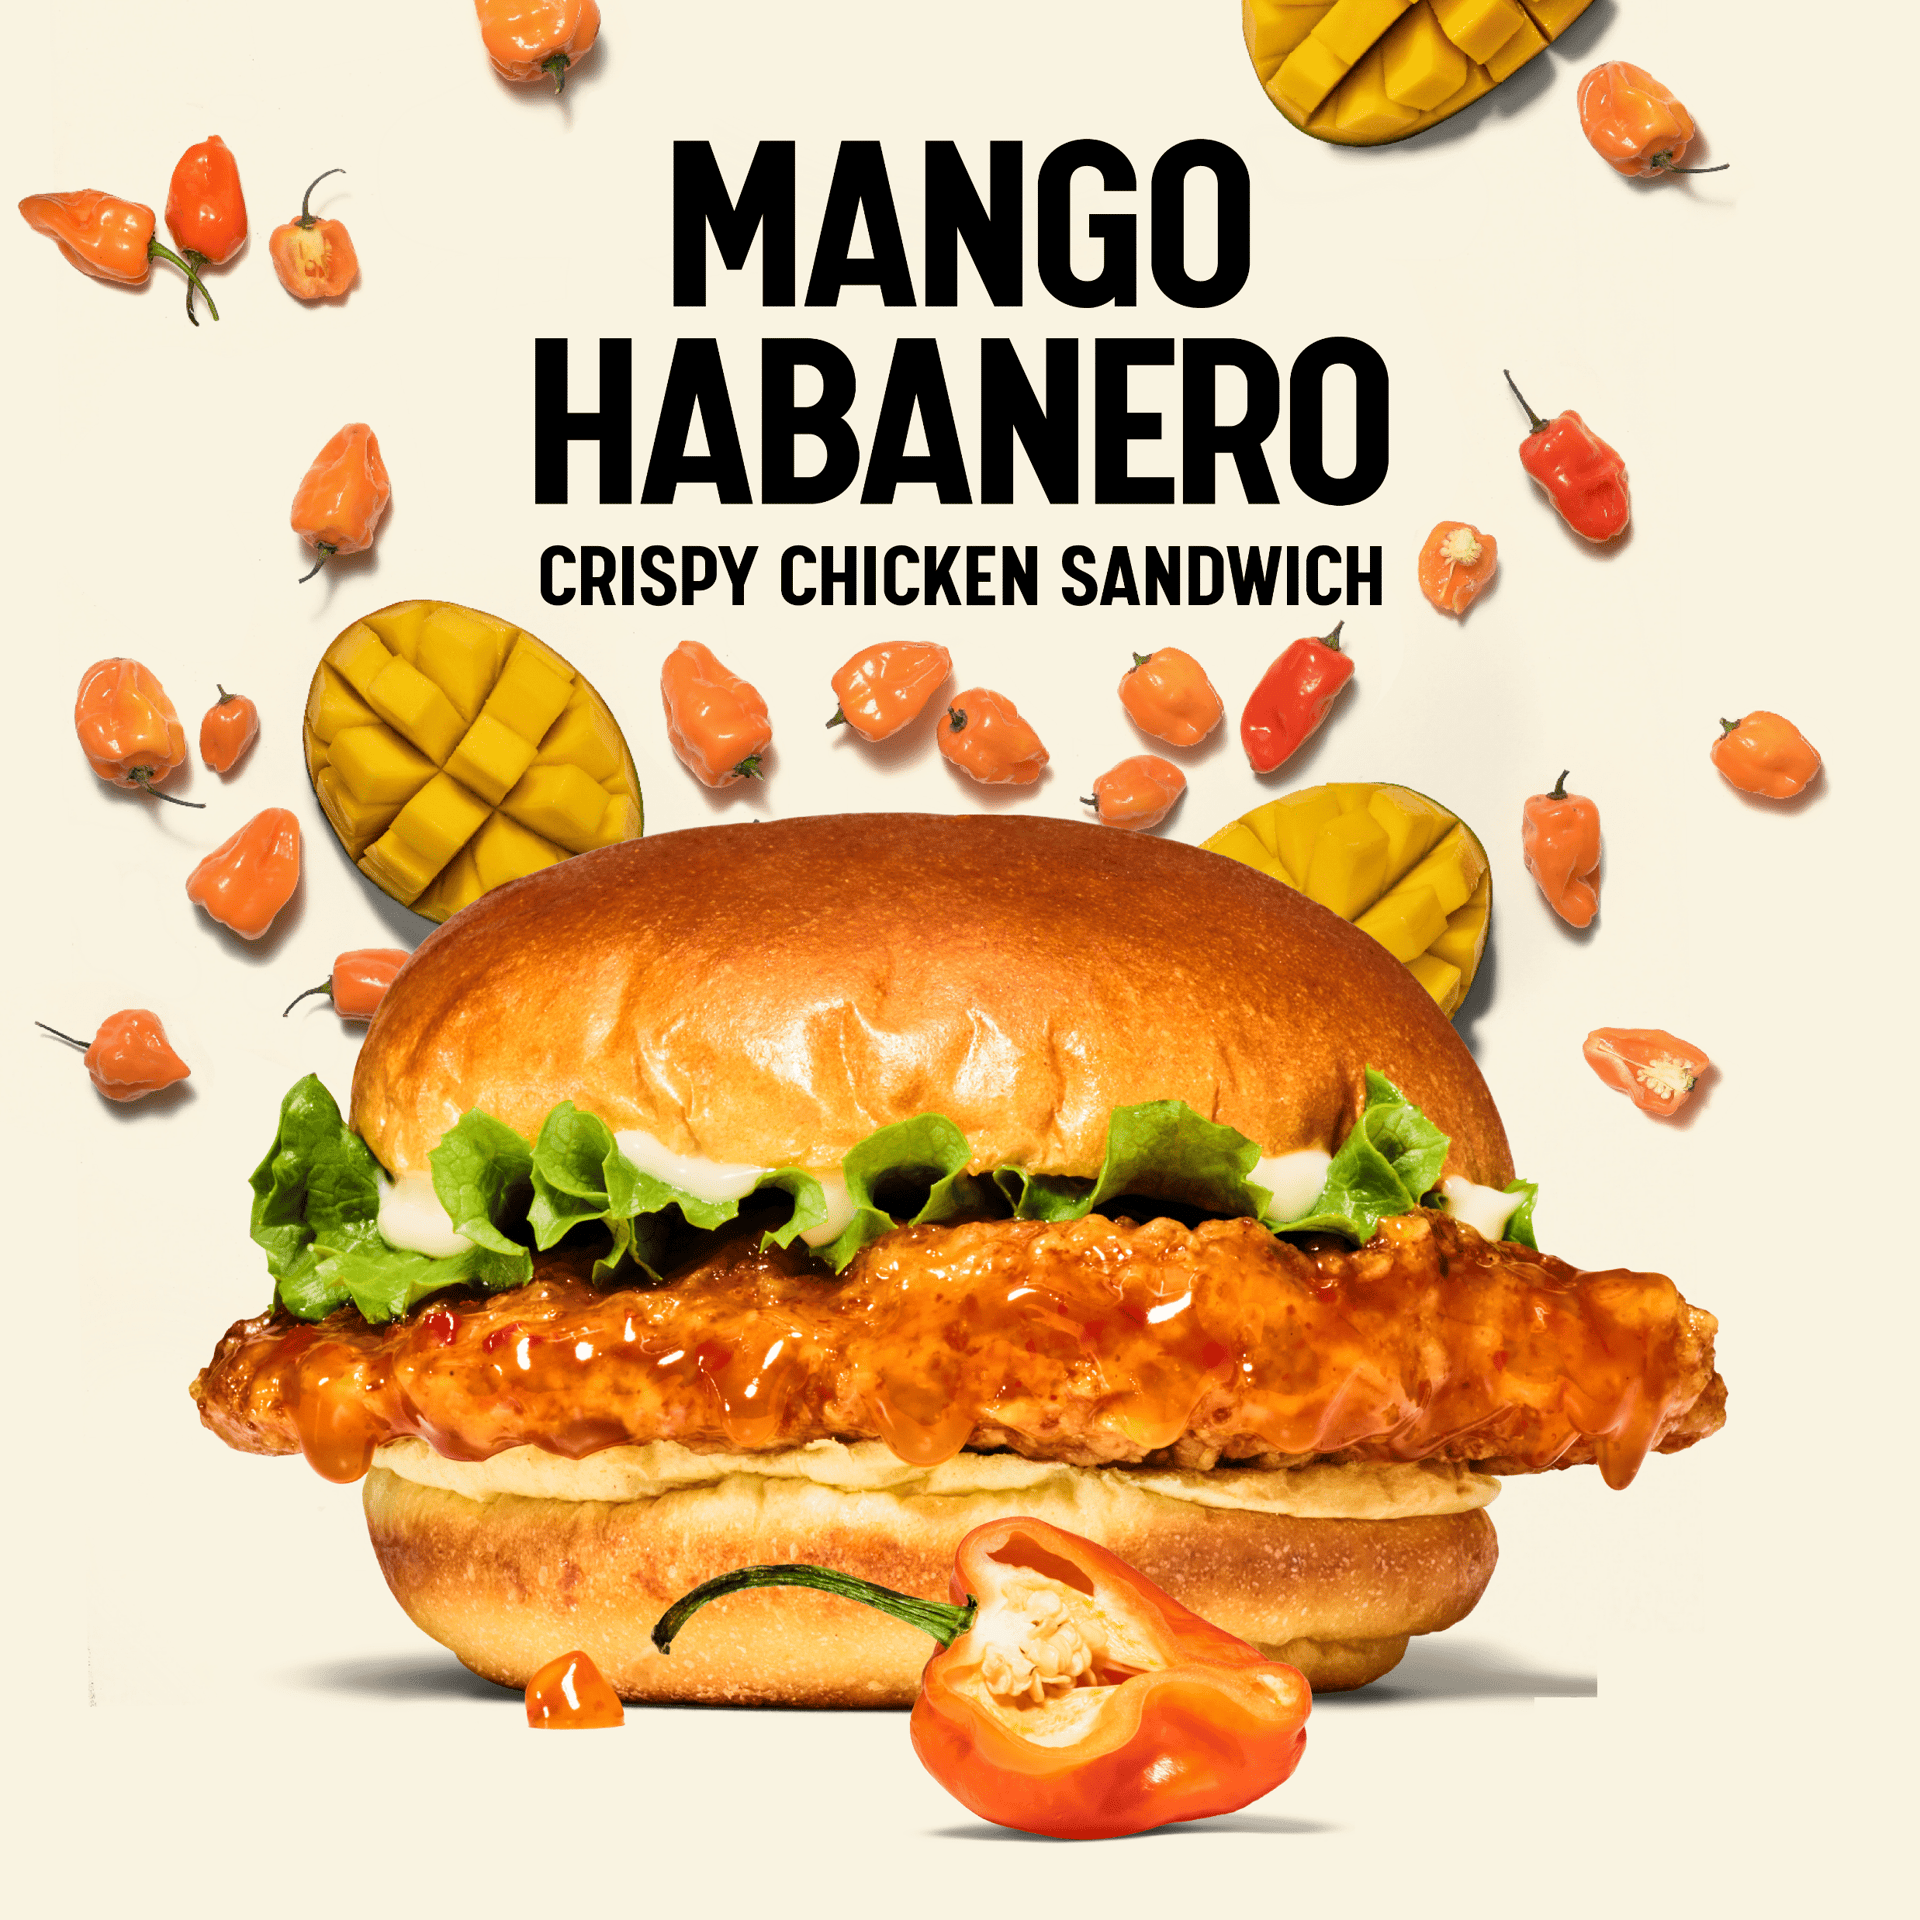 mango habanero crispy chicken sandwich from smashburger